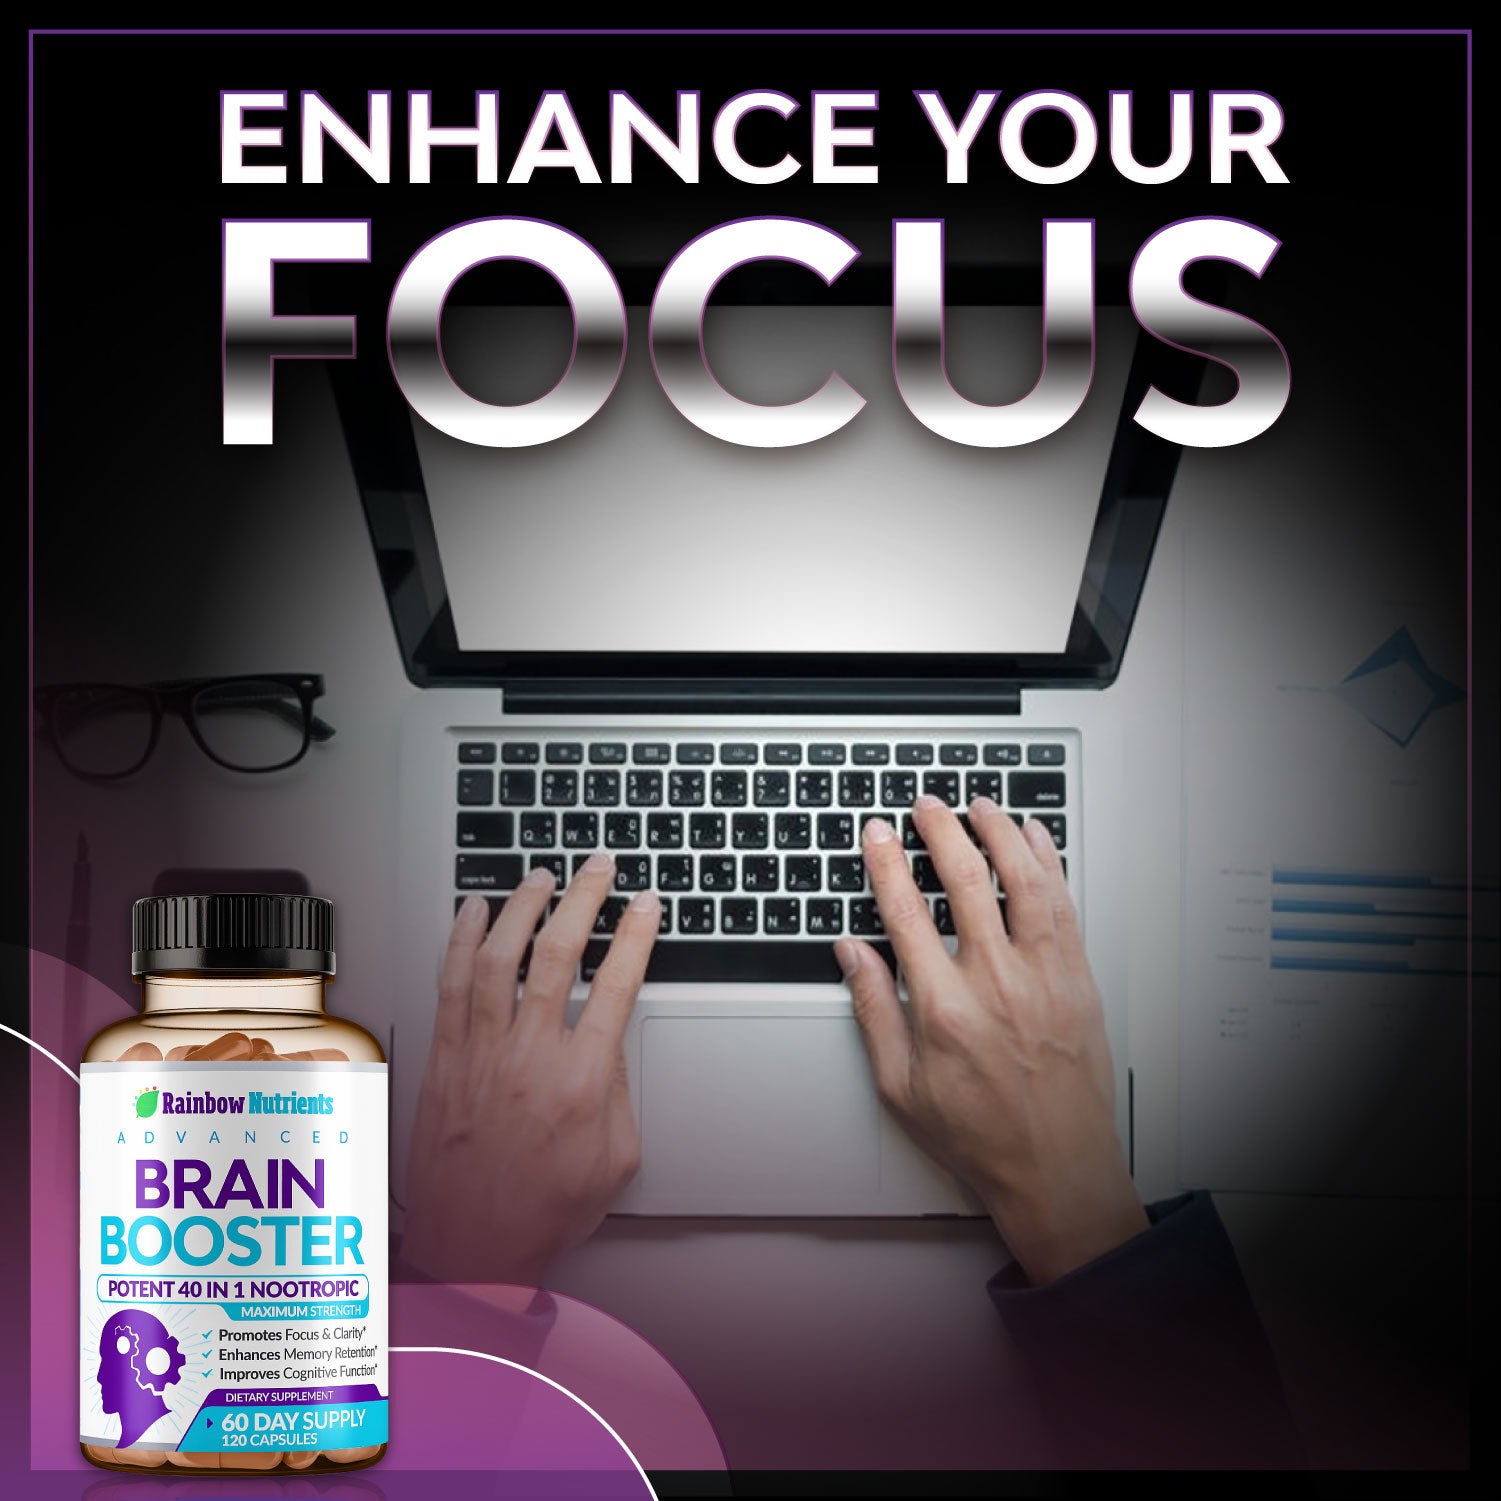 Enhance your Focus